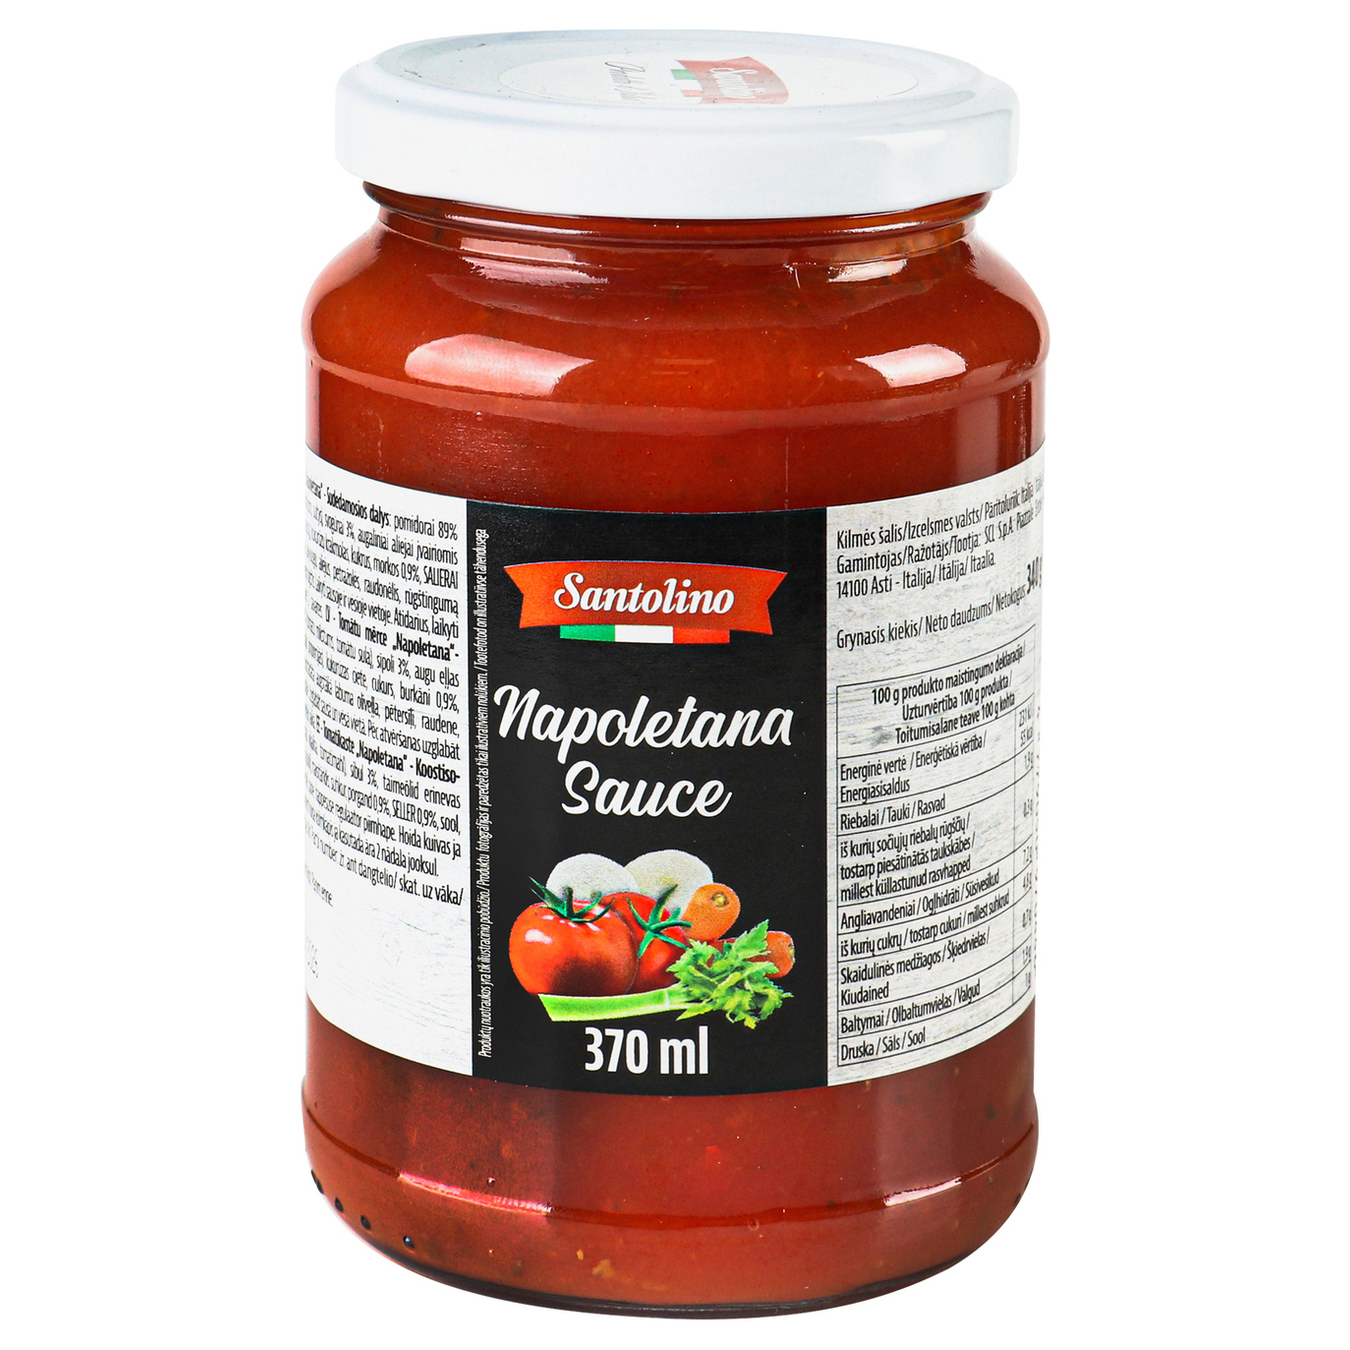 Sauce Santolino Neapolitan pasteurized 370g 2